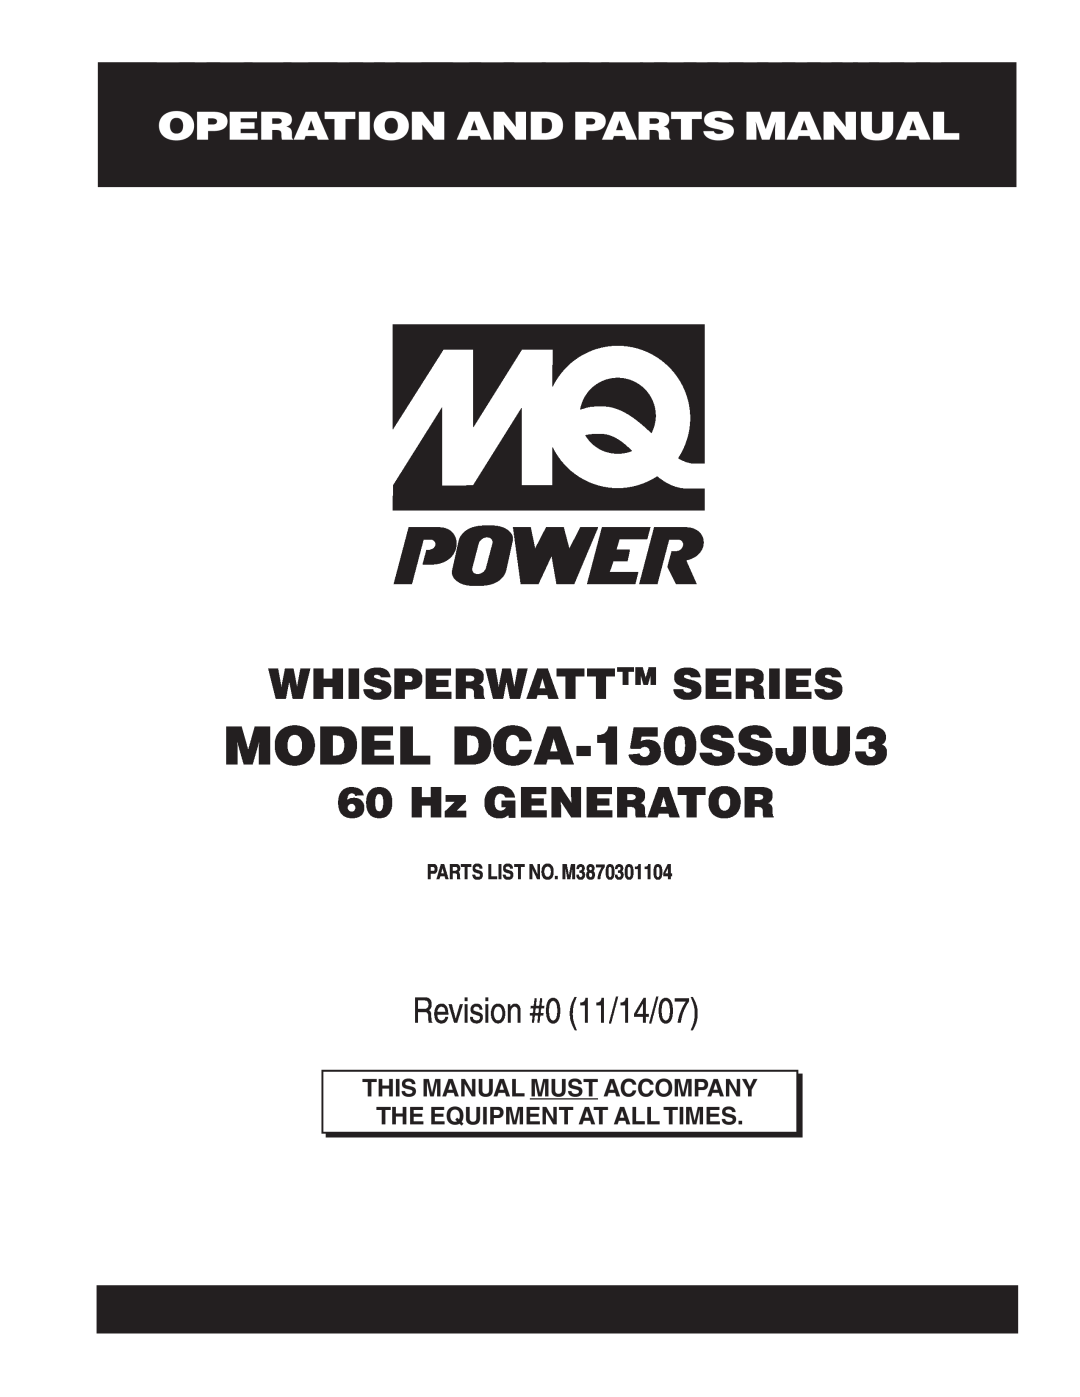 Multiquip operation manual Operation And Parts Manual, PARTS LIST NO. M3870301104, MODEL DCA-150SSJU3, Hz GENERATOR 